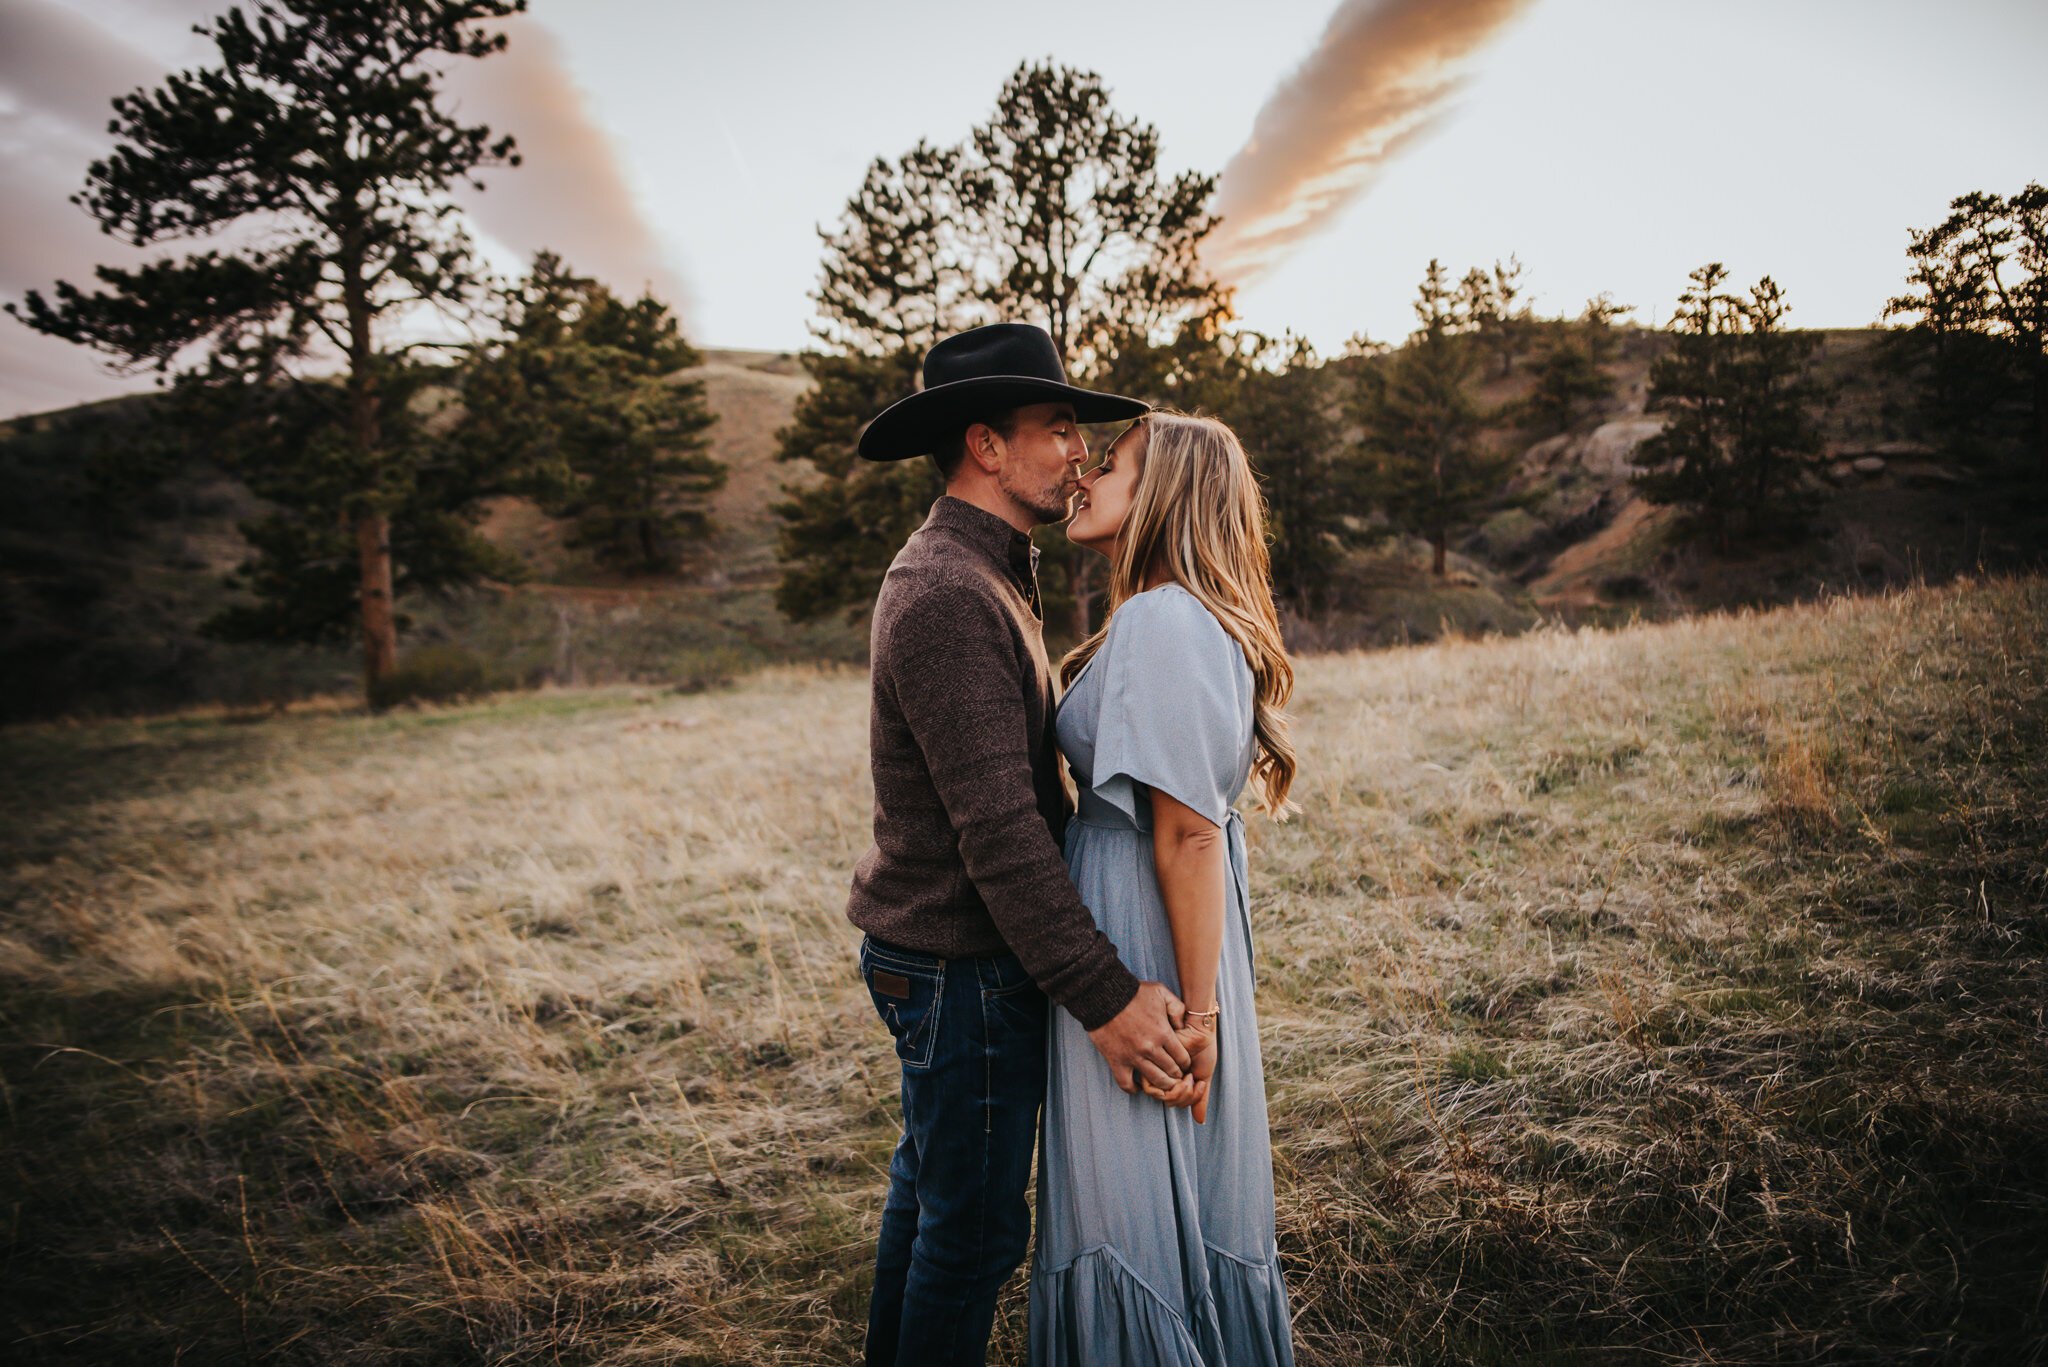 Shelby+and+Brady+Engagement+Session+Cheyenne+Wyoming+Sunset+Water+Fields+Rocks+Nature+Colorado+Photographer+Wild+Prairie+Photography-36-2020.jpeg